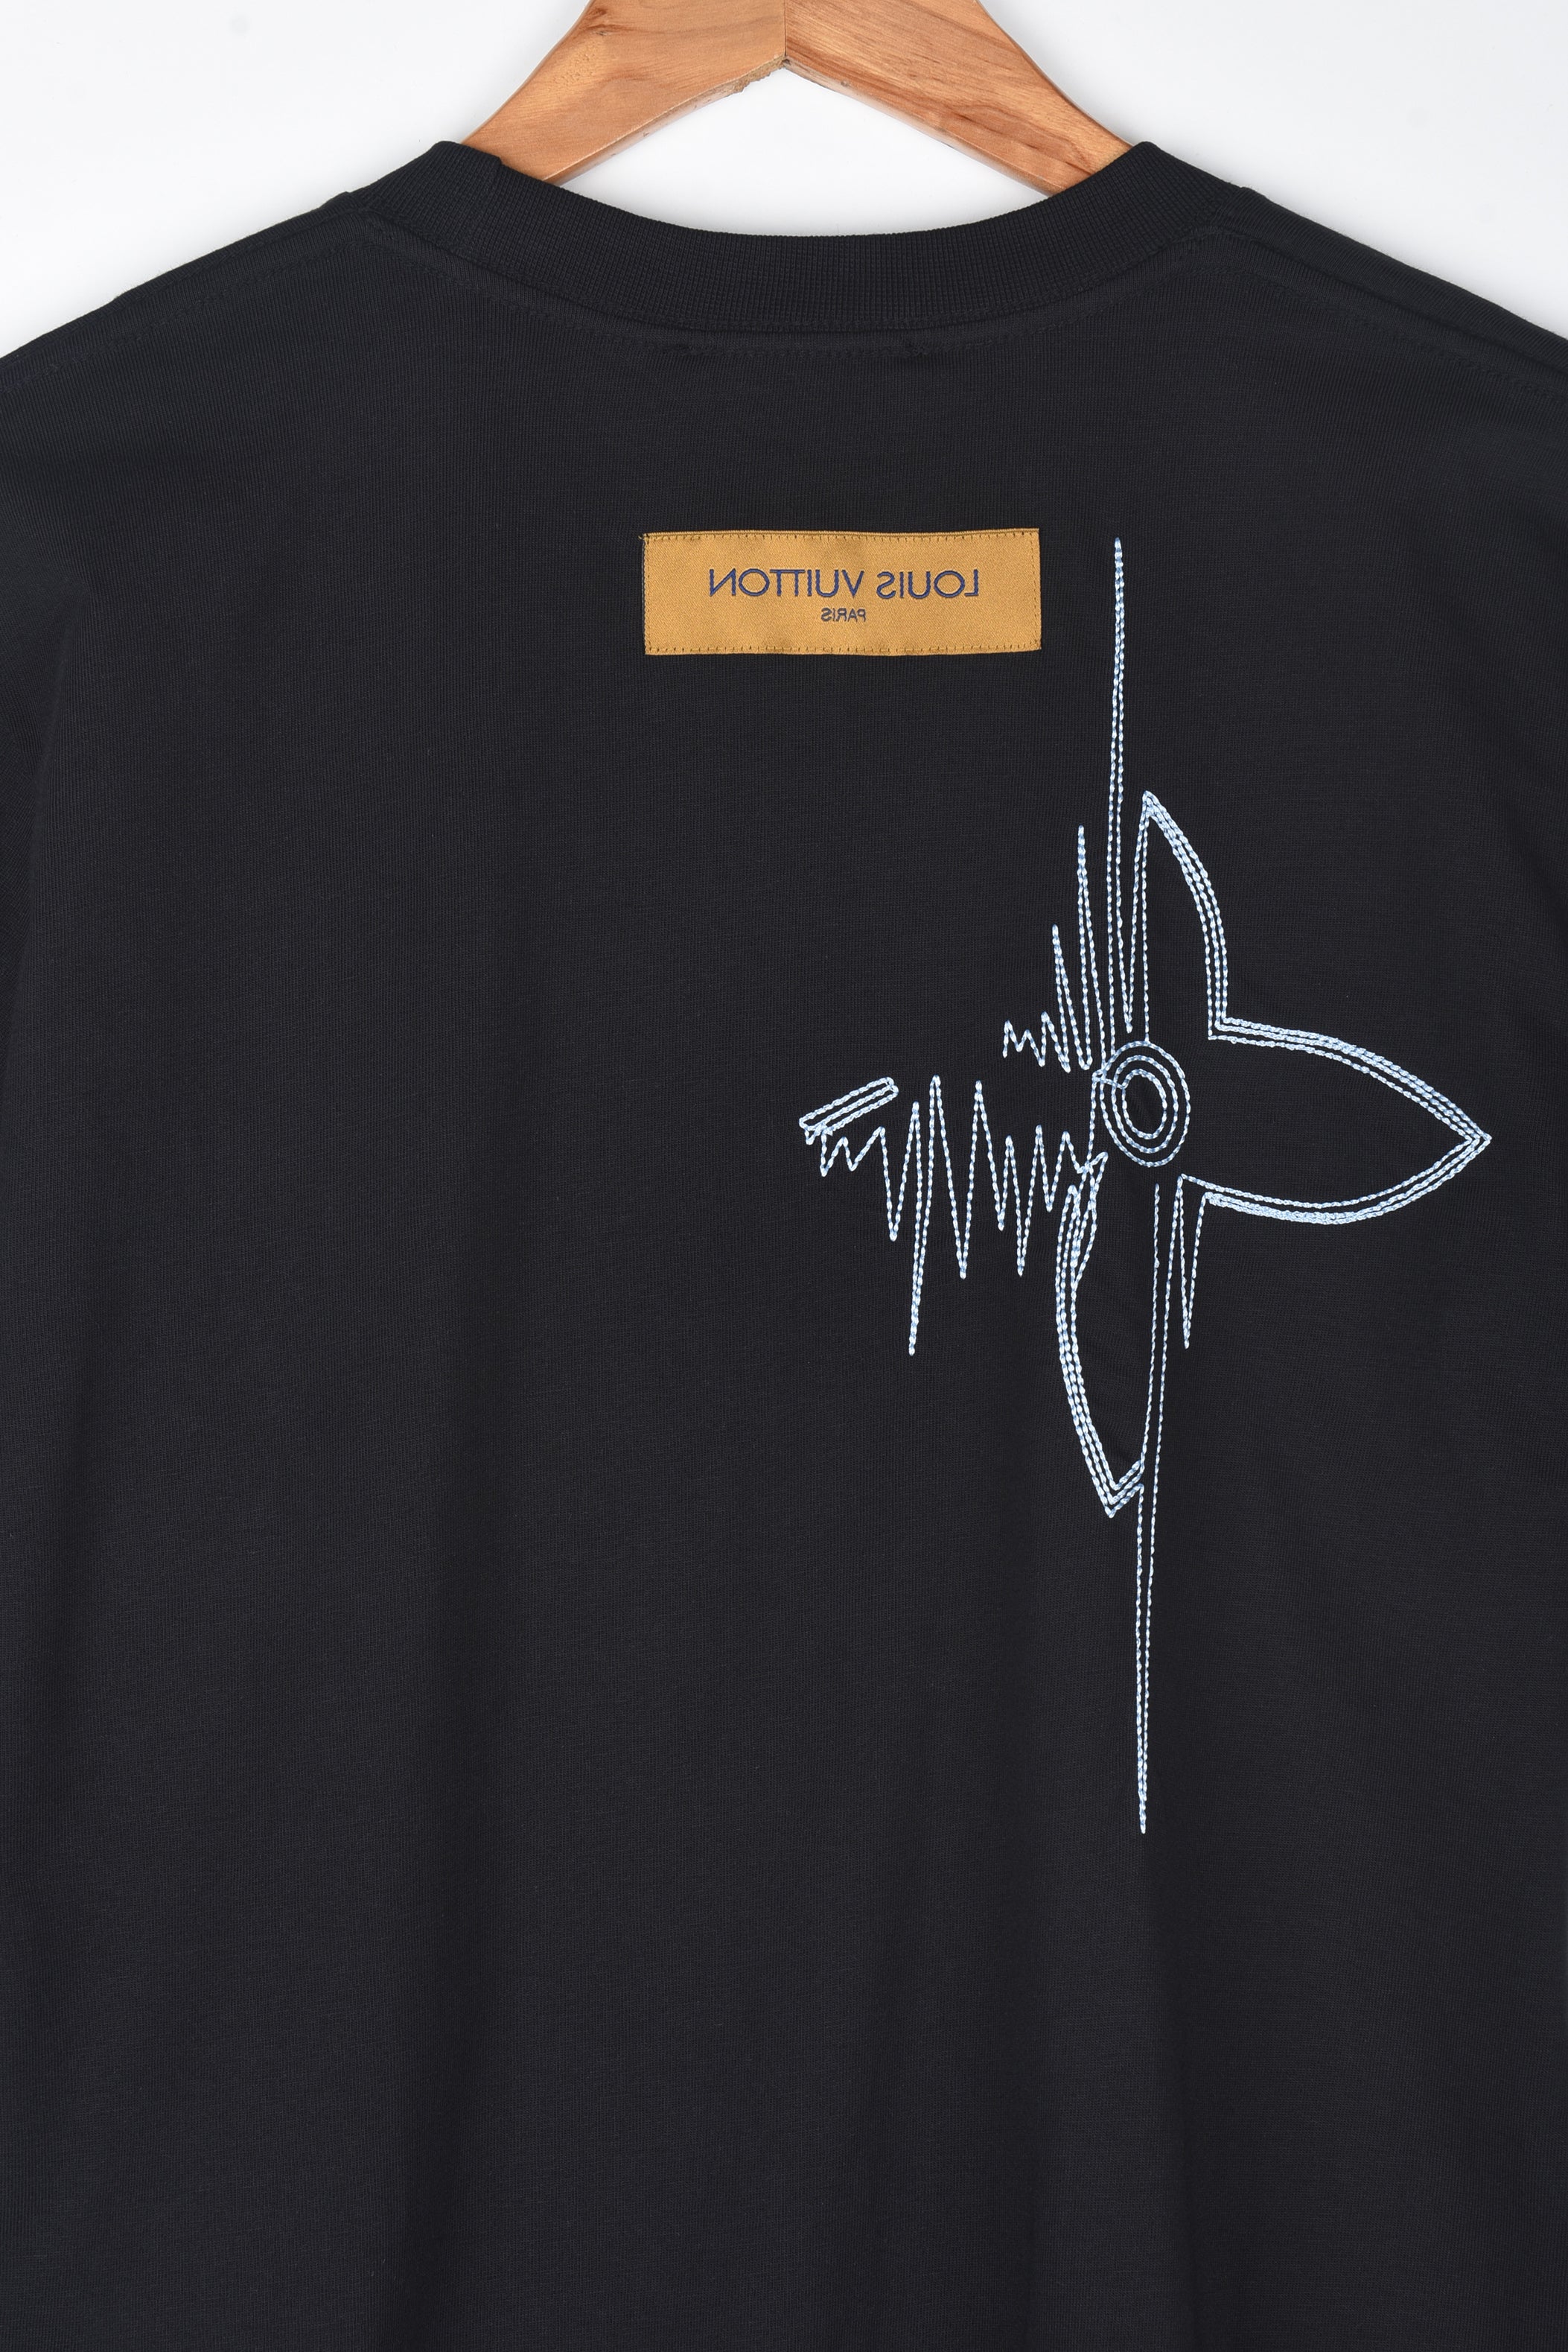 Louis Vuitton 1AAU5D LV Frequency Graphic T-Shirt, Black, L